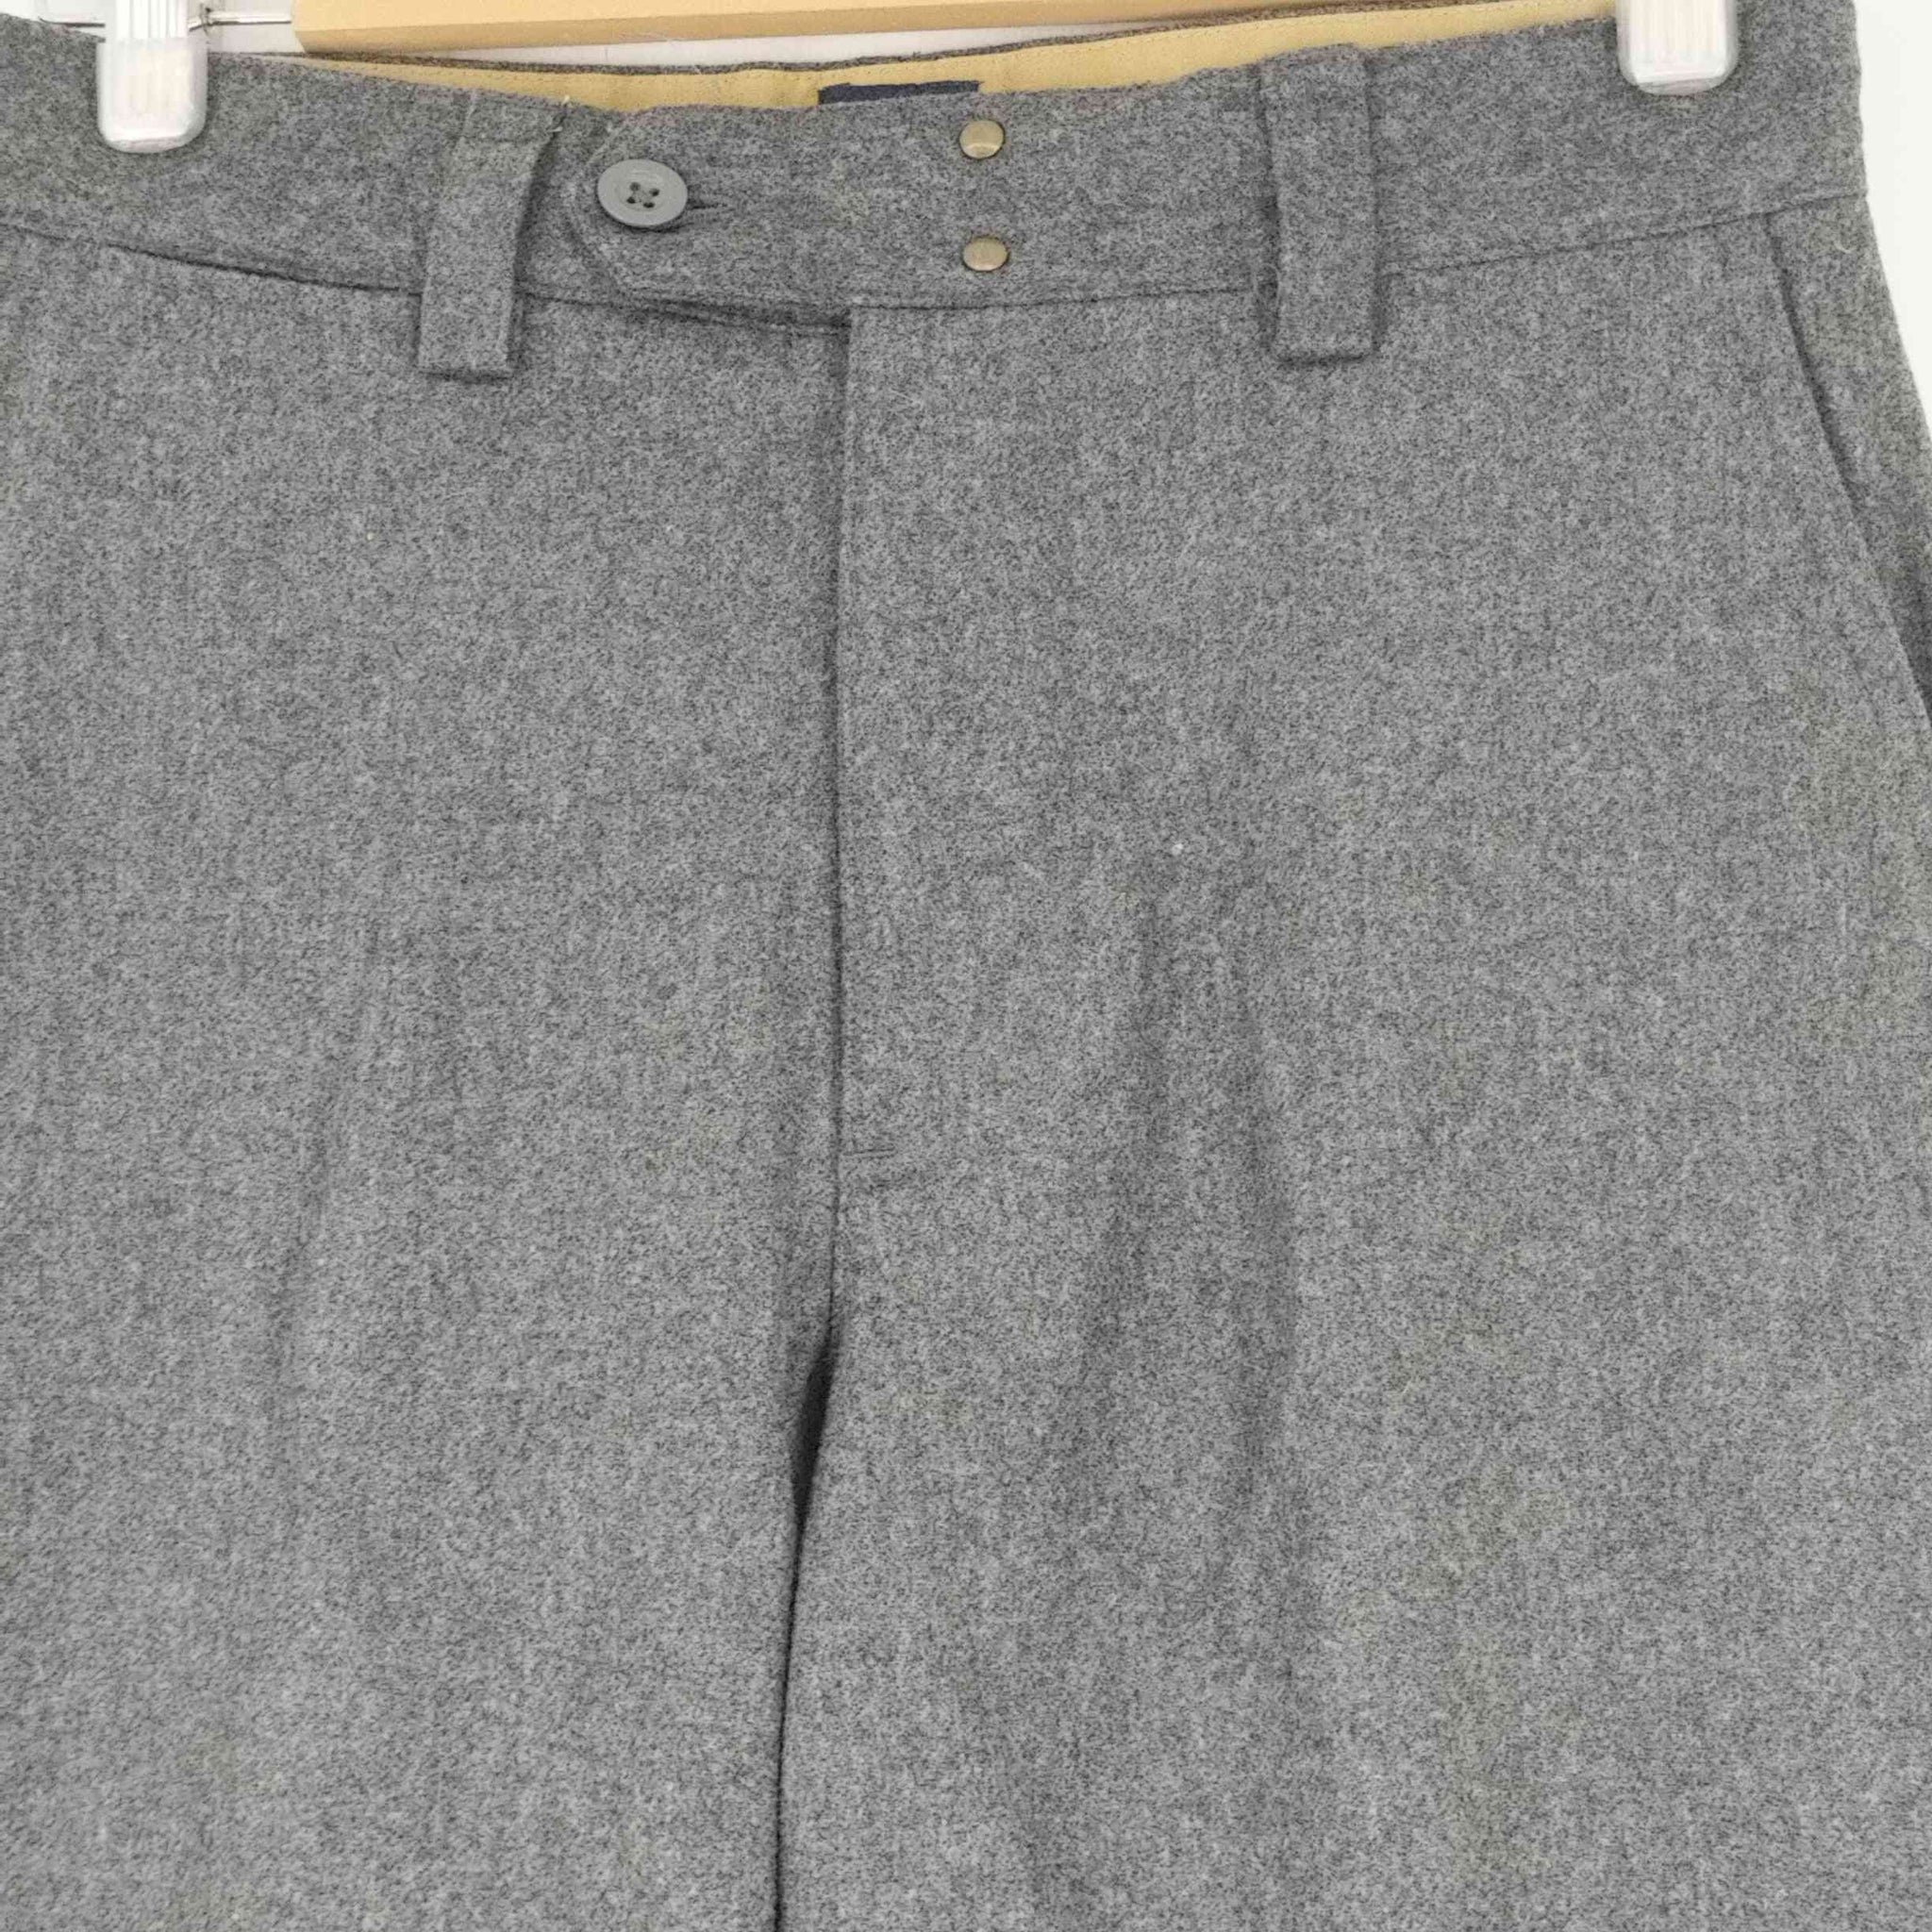 Gap(ギャップ)OLD GAP French Work Sampling Trousers